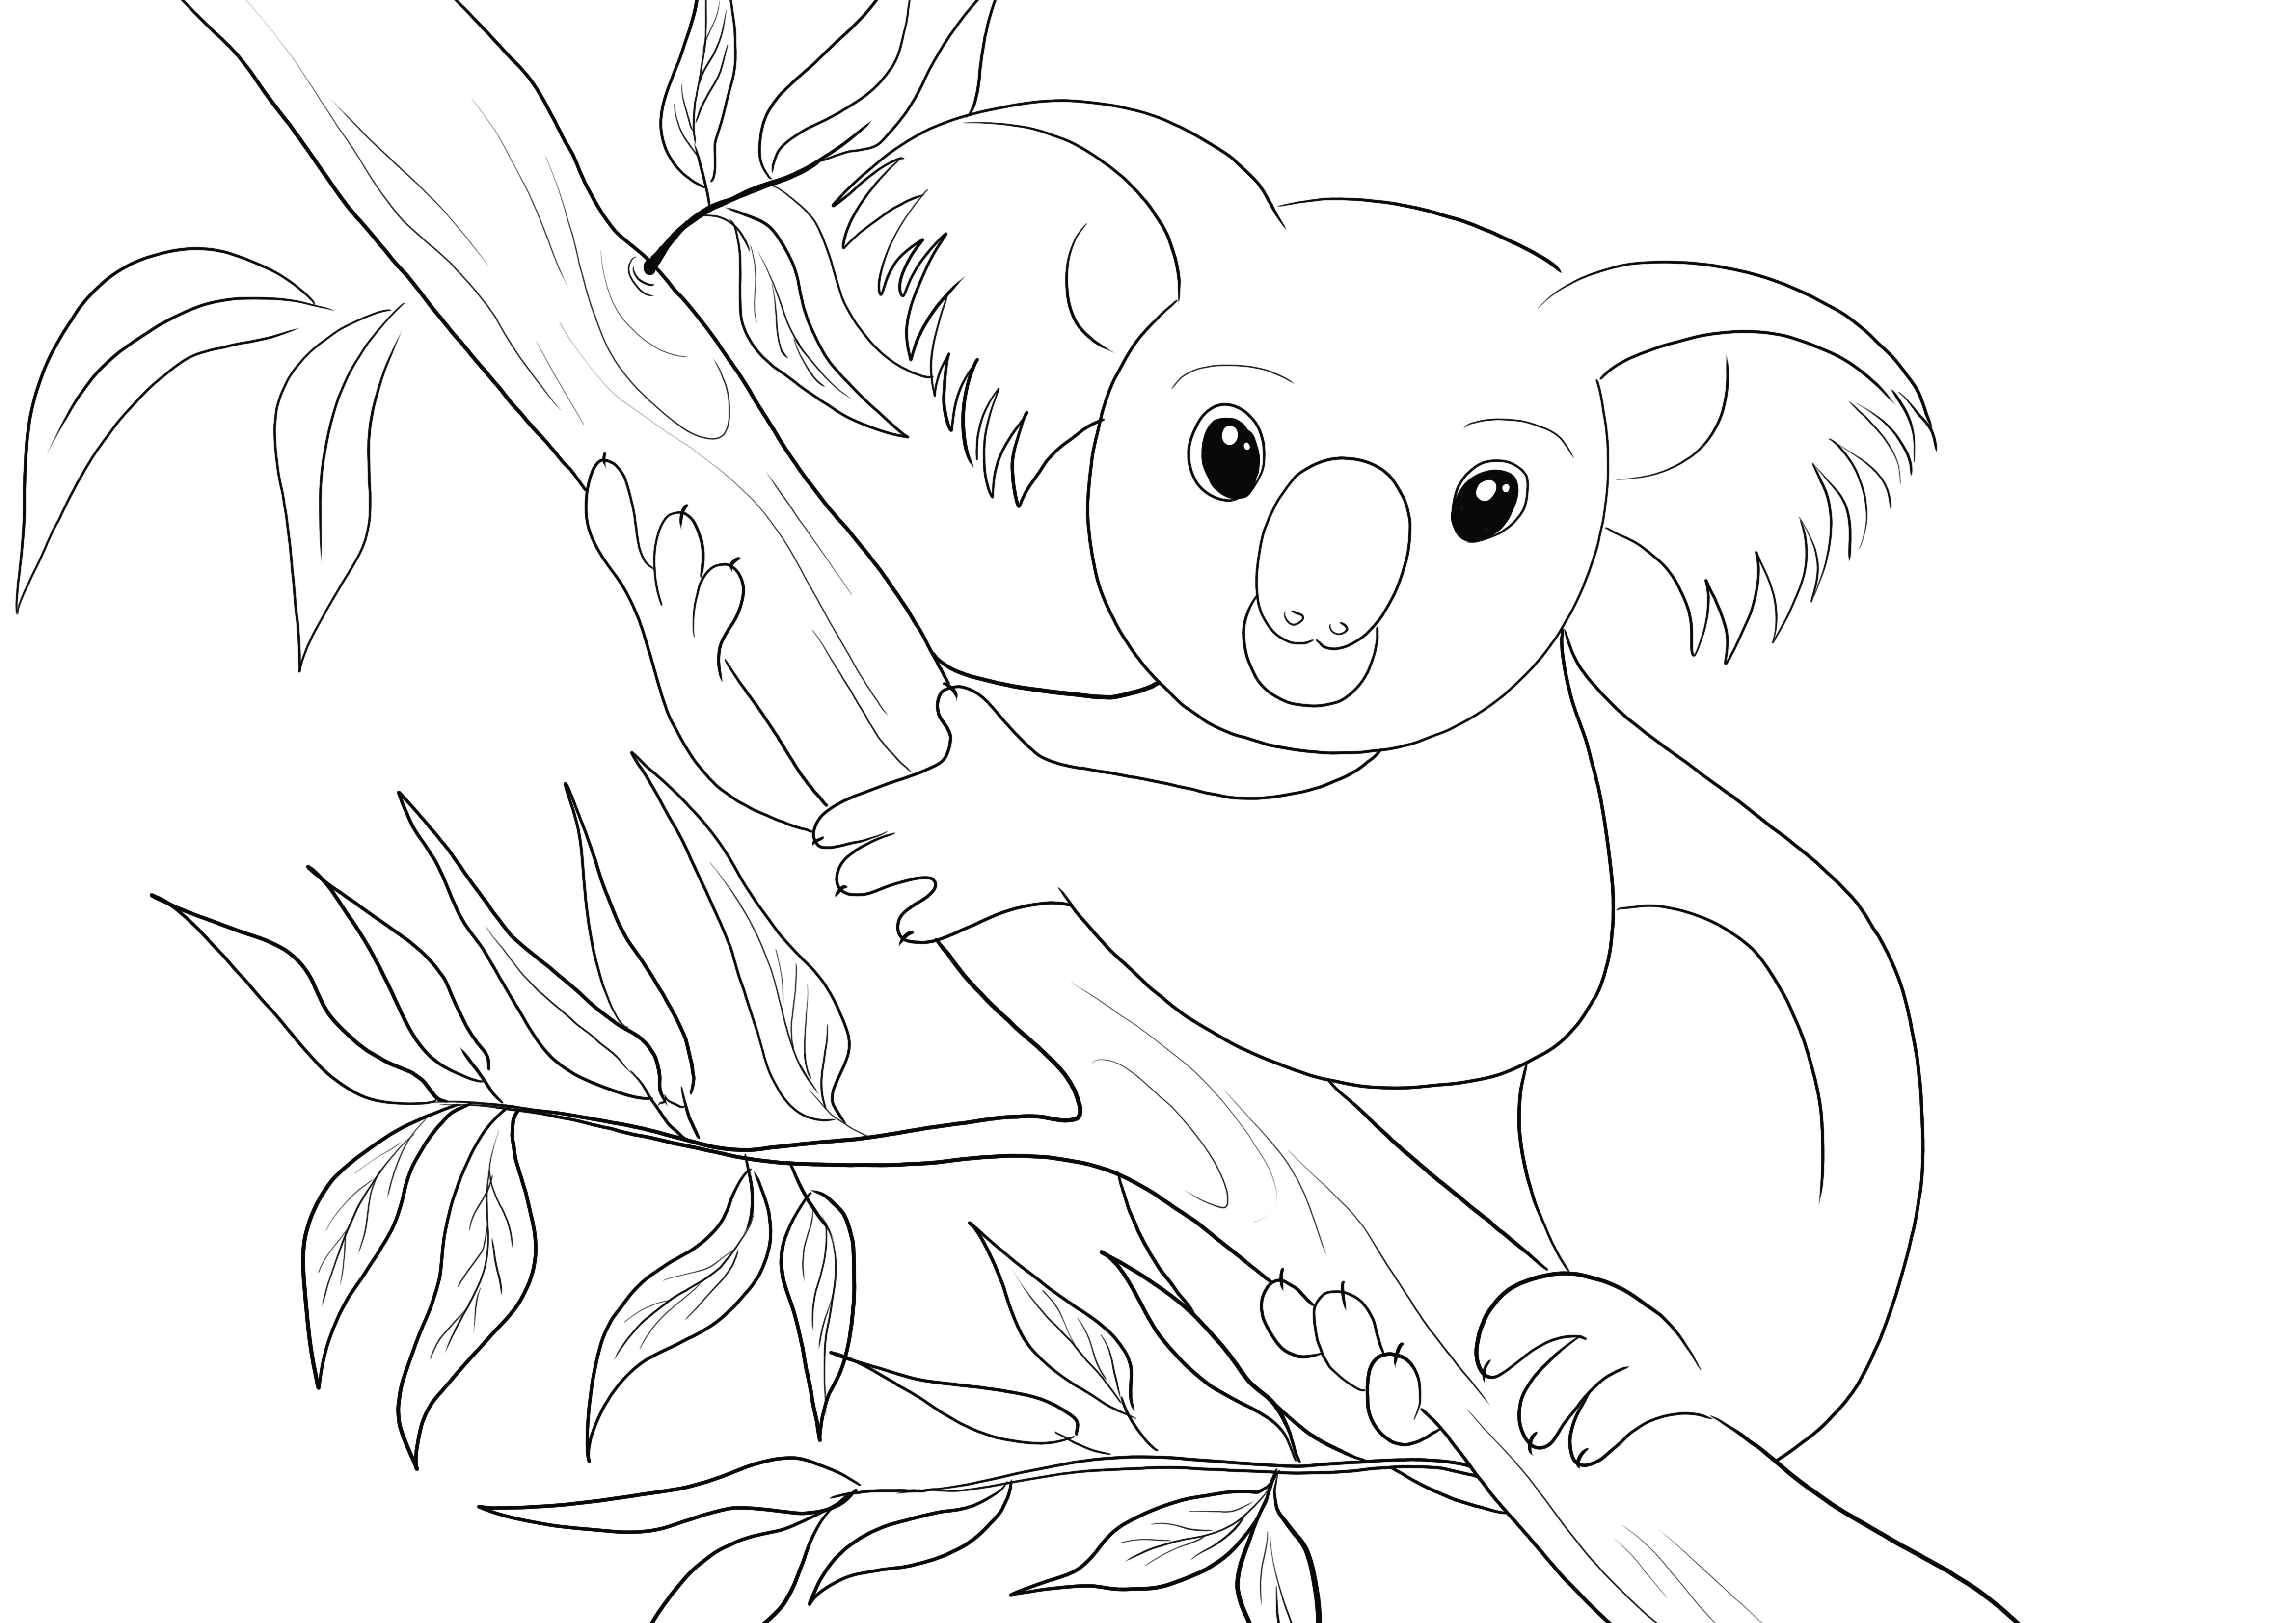 Cute Koala coloring sheet free to print and download